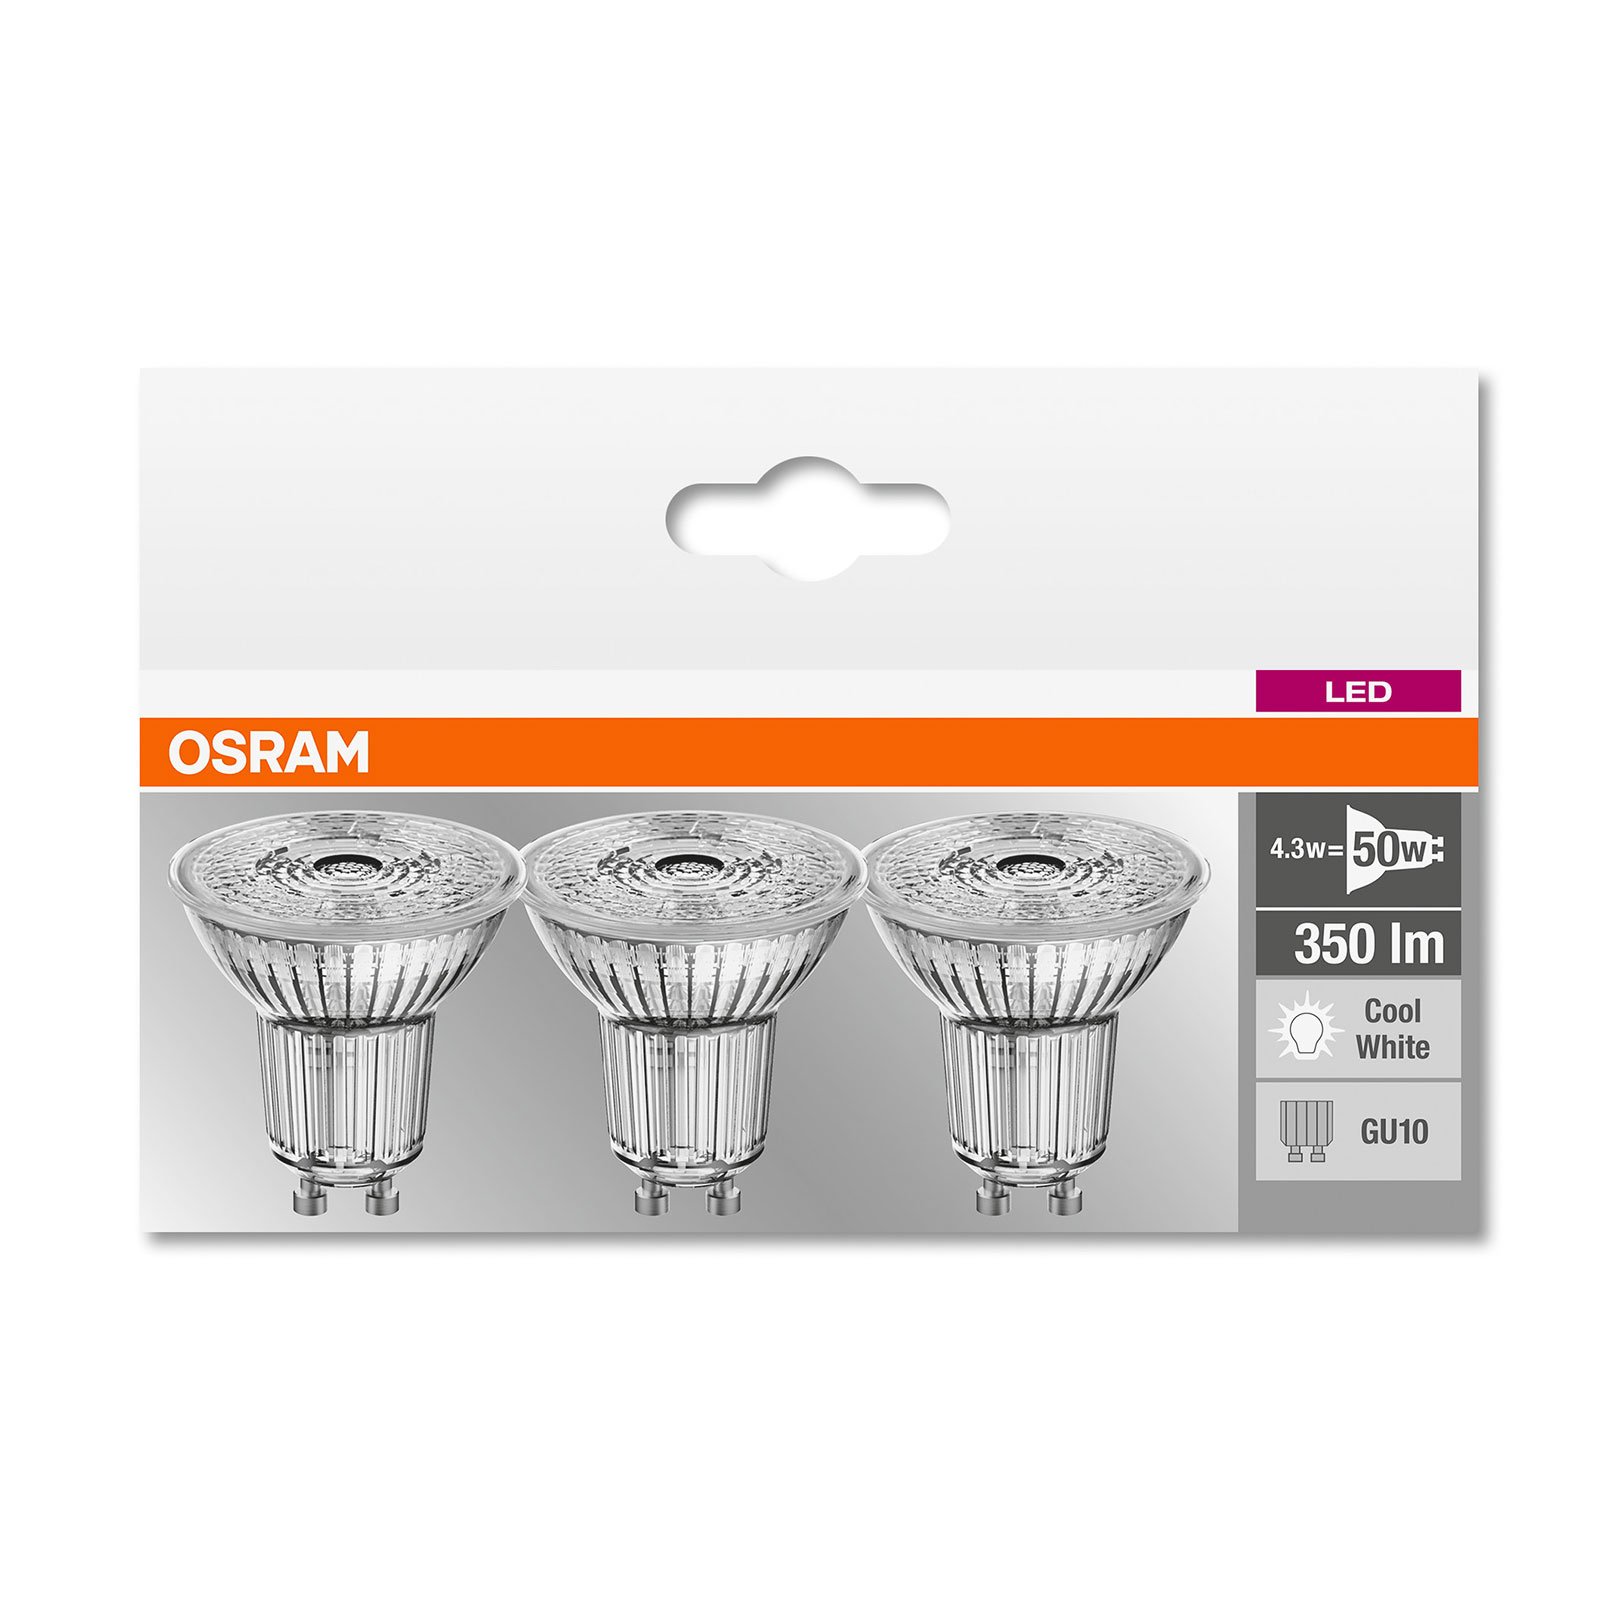 LED reflector bulb GU10 4.3W, cool white, set of 3